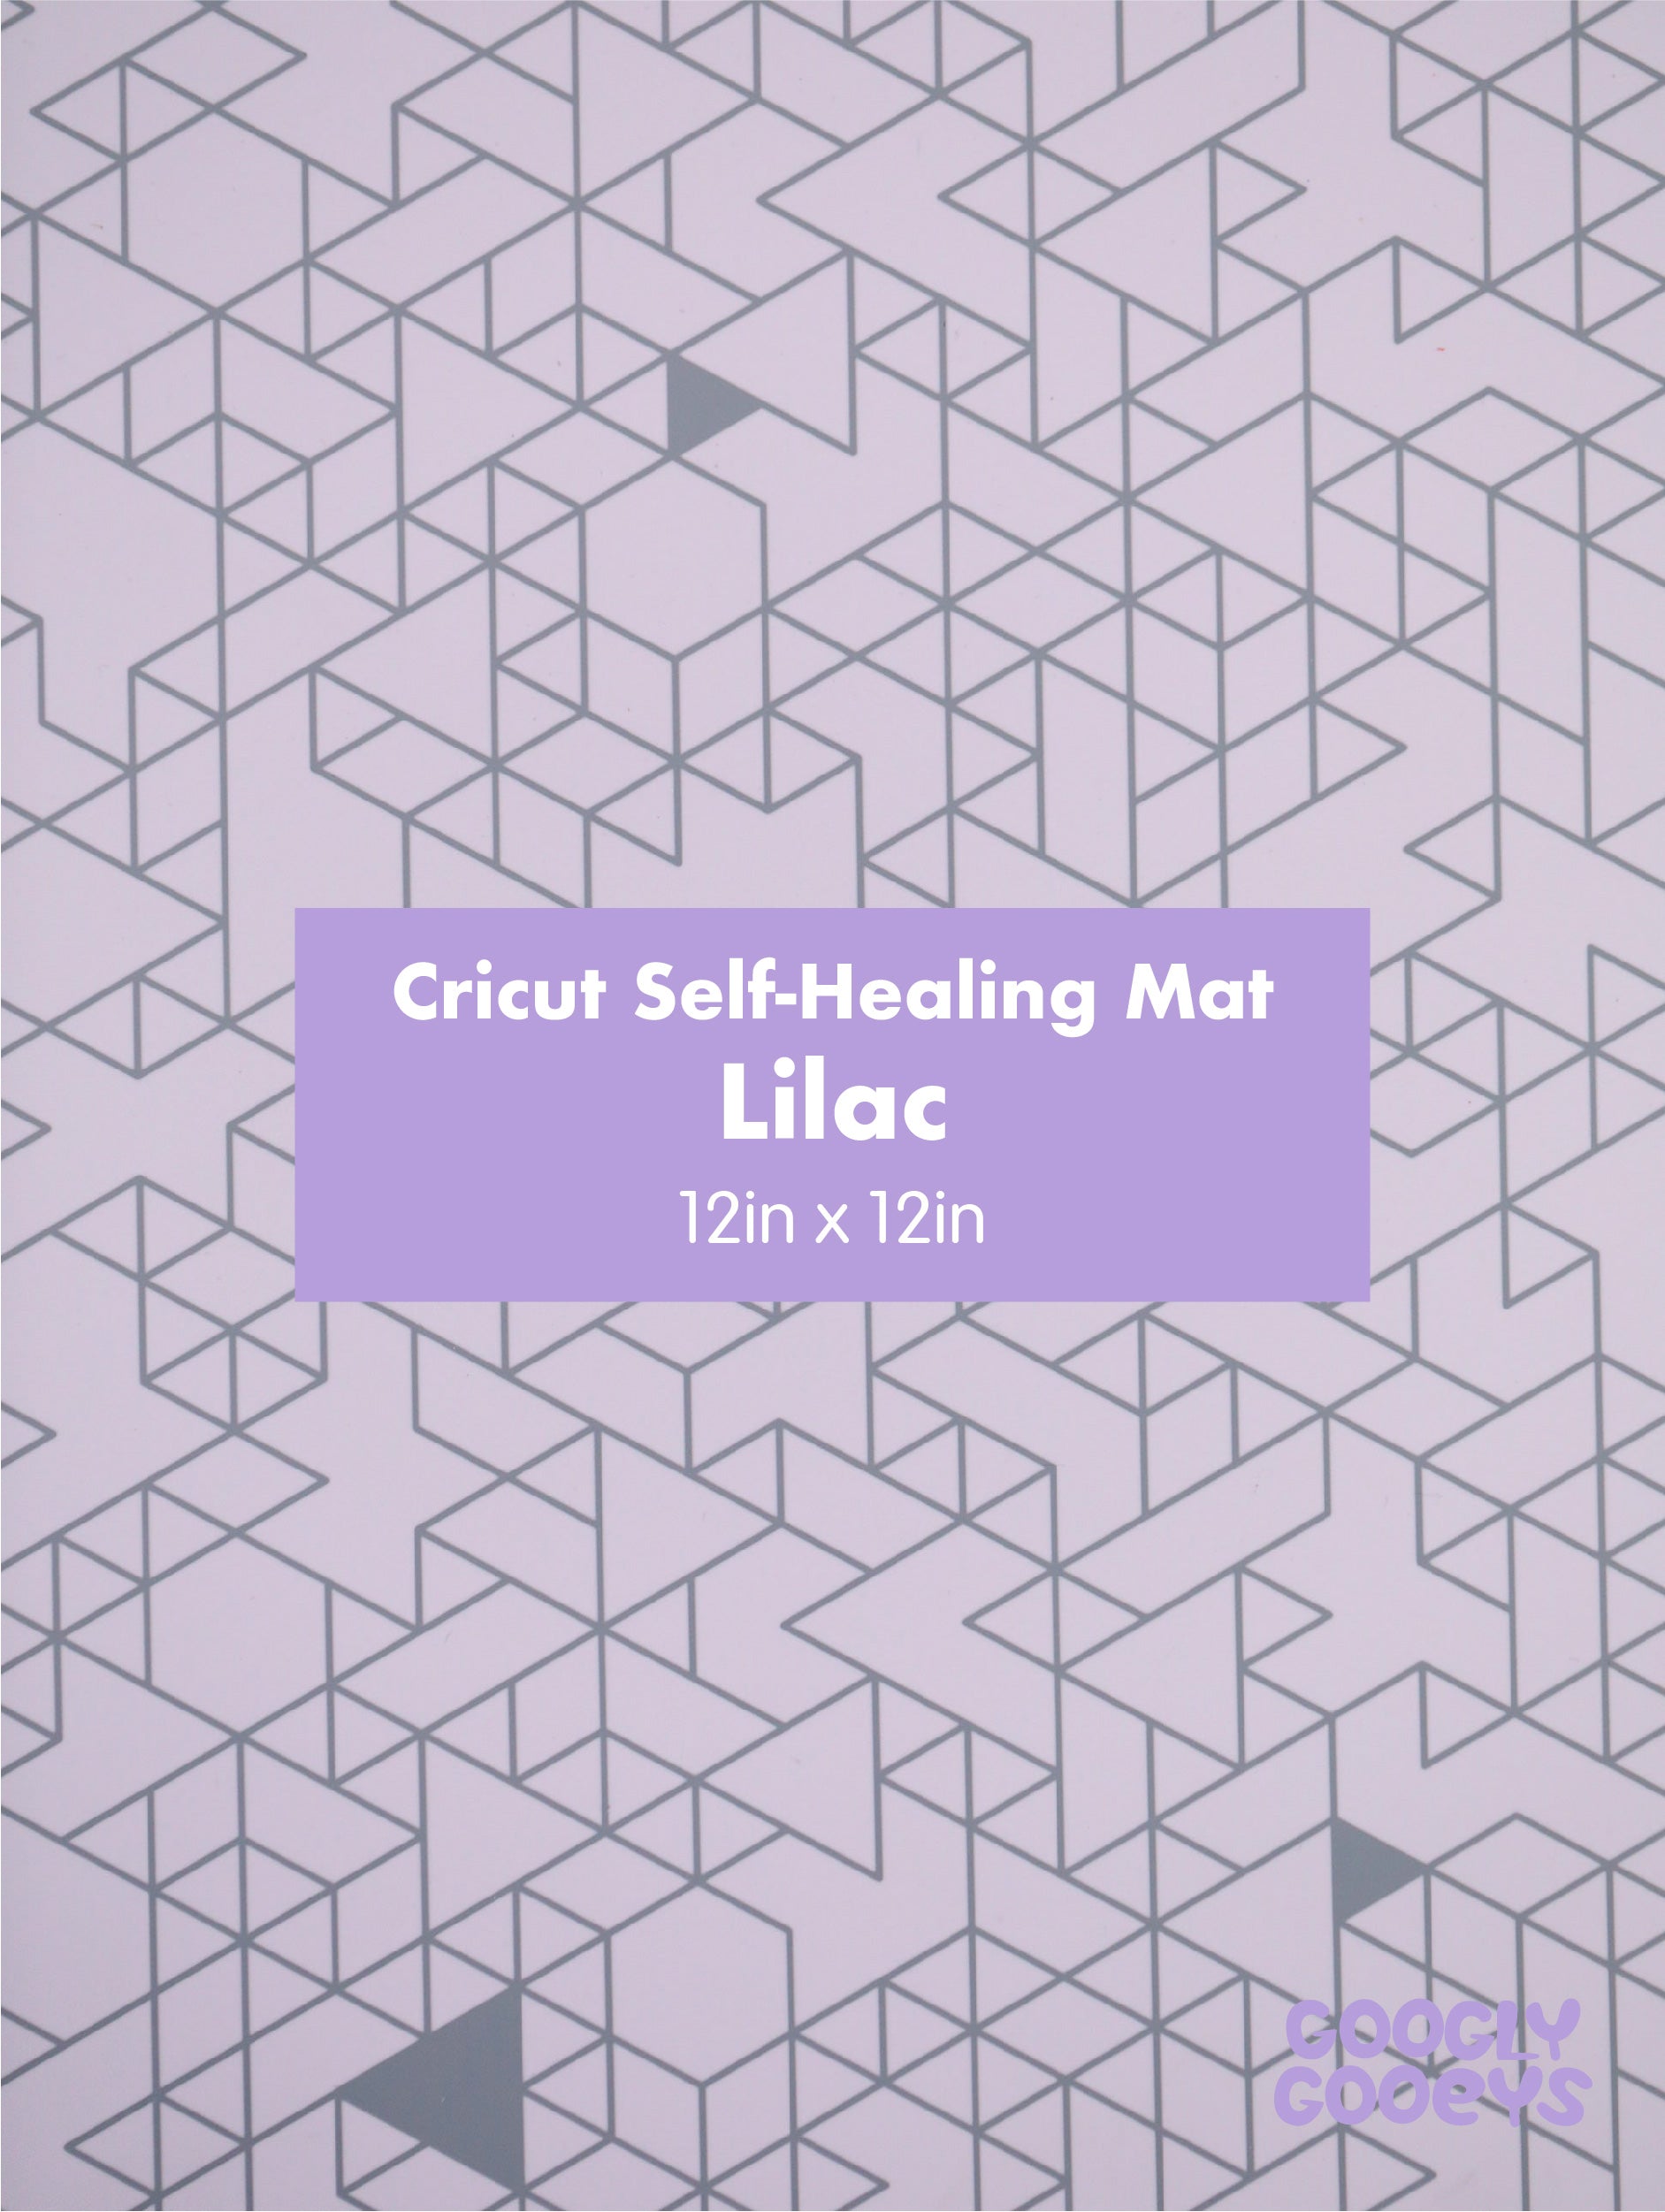 Cricut Lilac Decorative Self Healing Mat 12x12 for Crafting DIY Projects